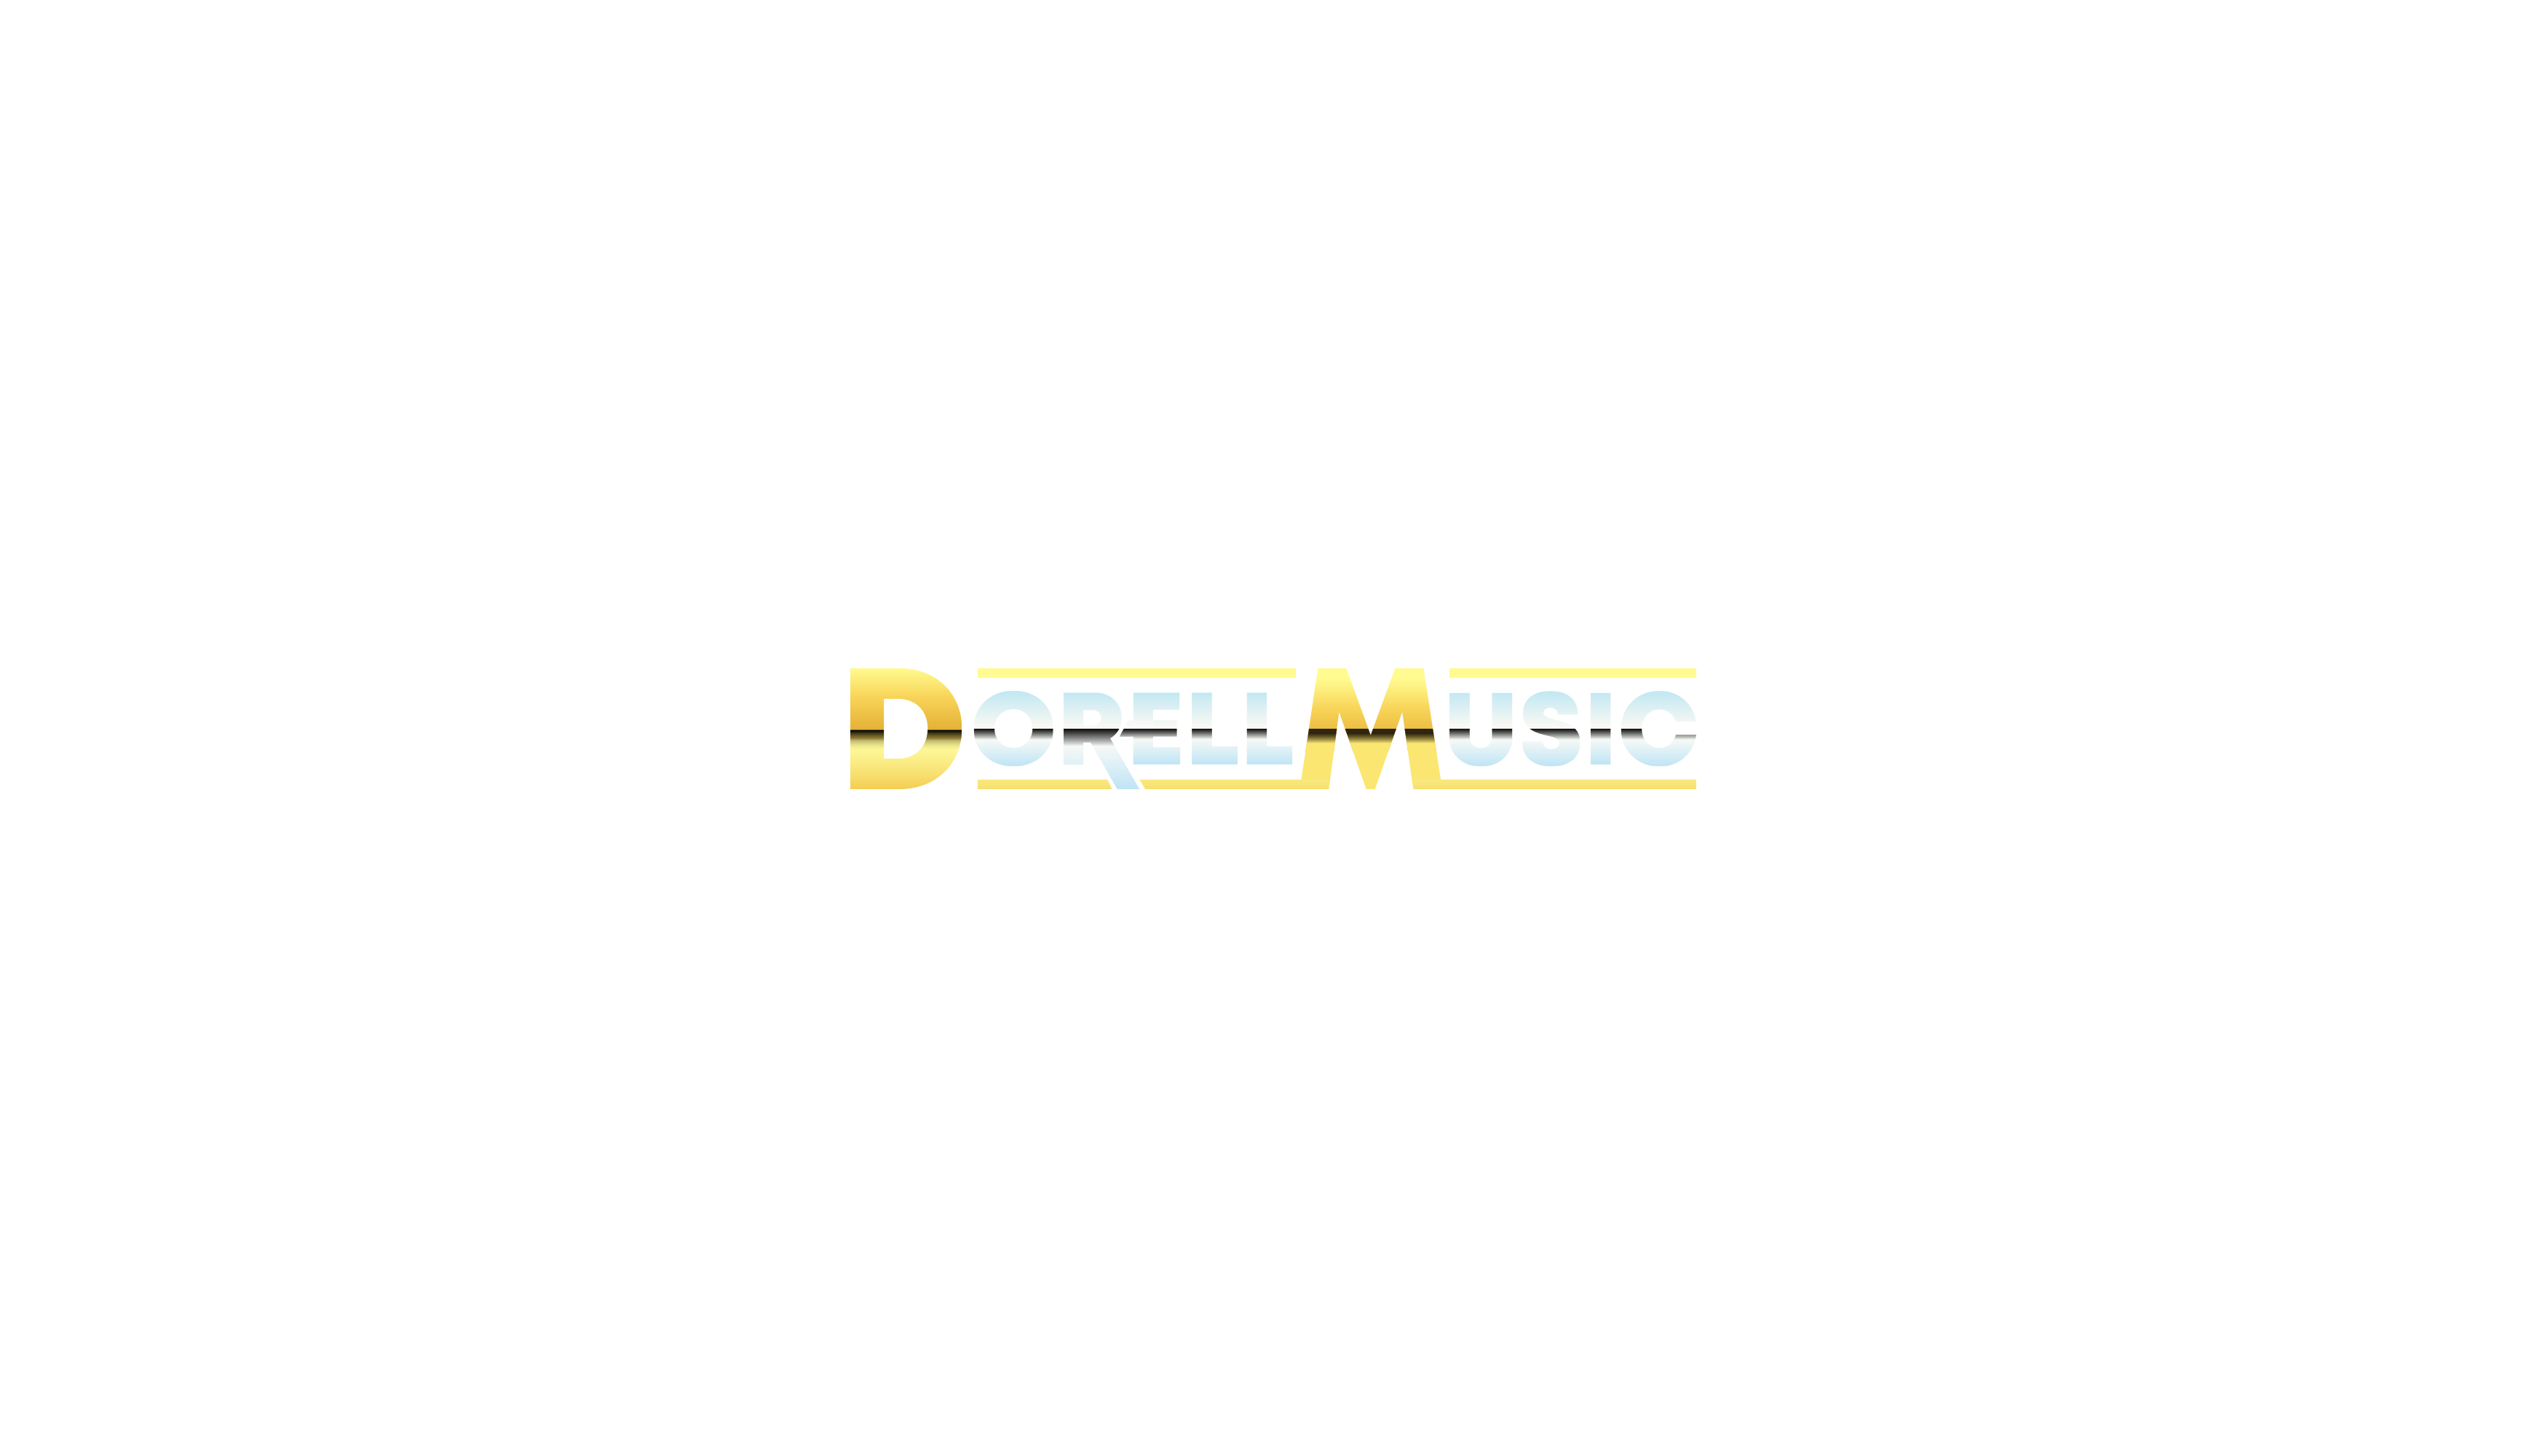 DorellMusic